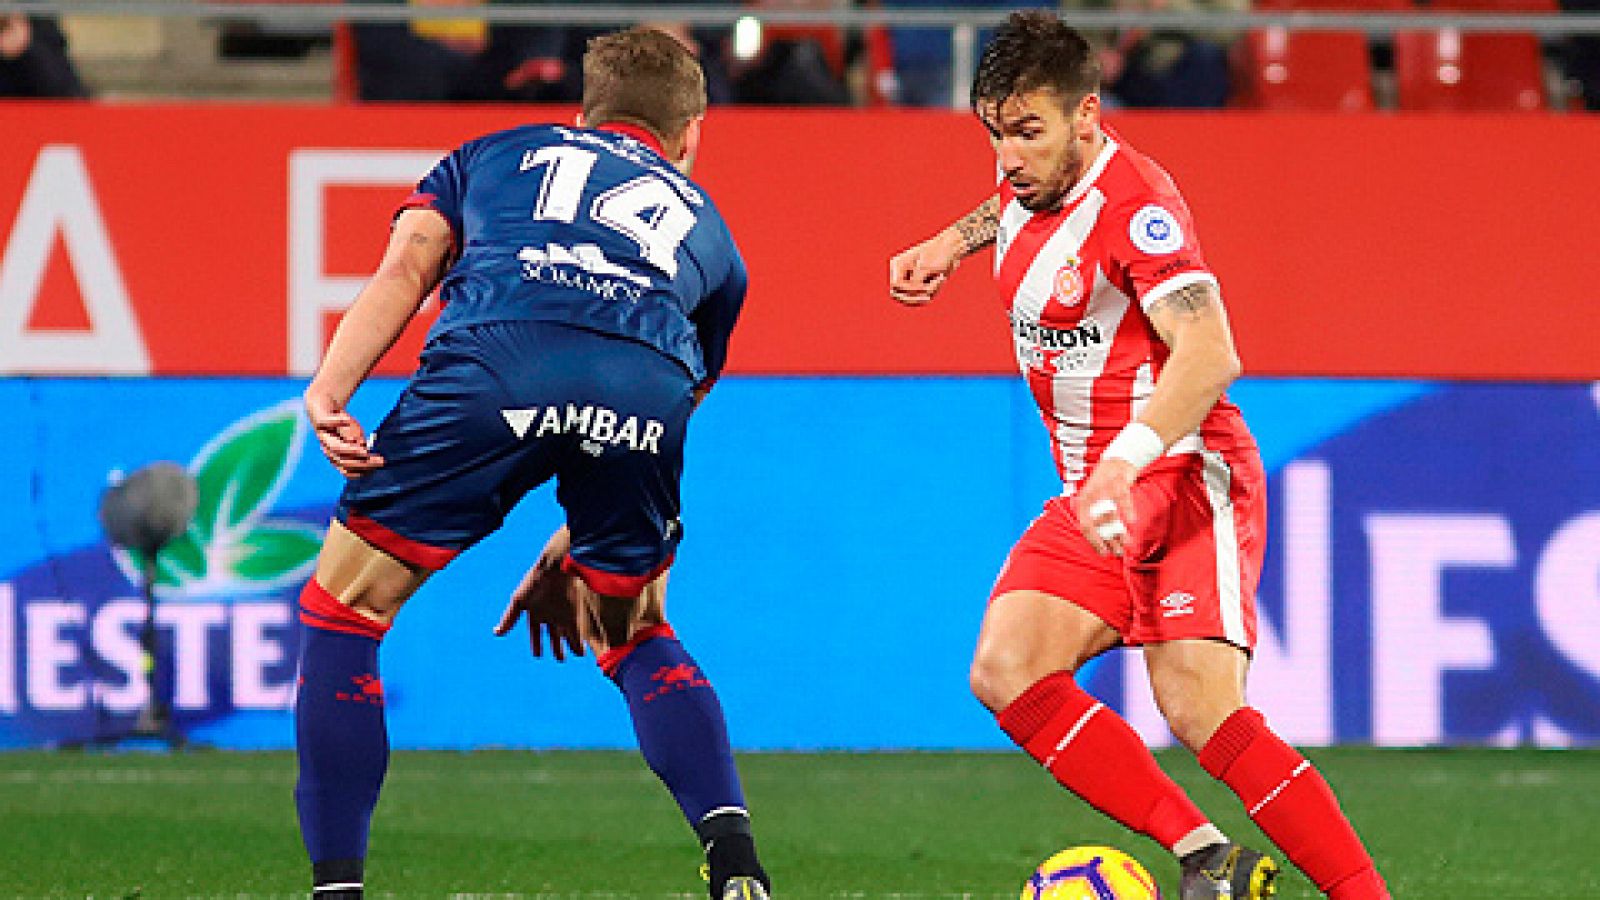 El jugador del Girona Portu trata de zafarse de la defensa de Pulido.